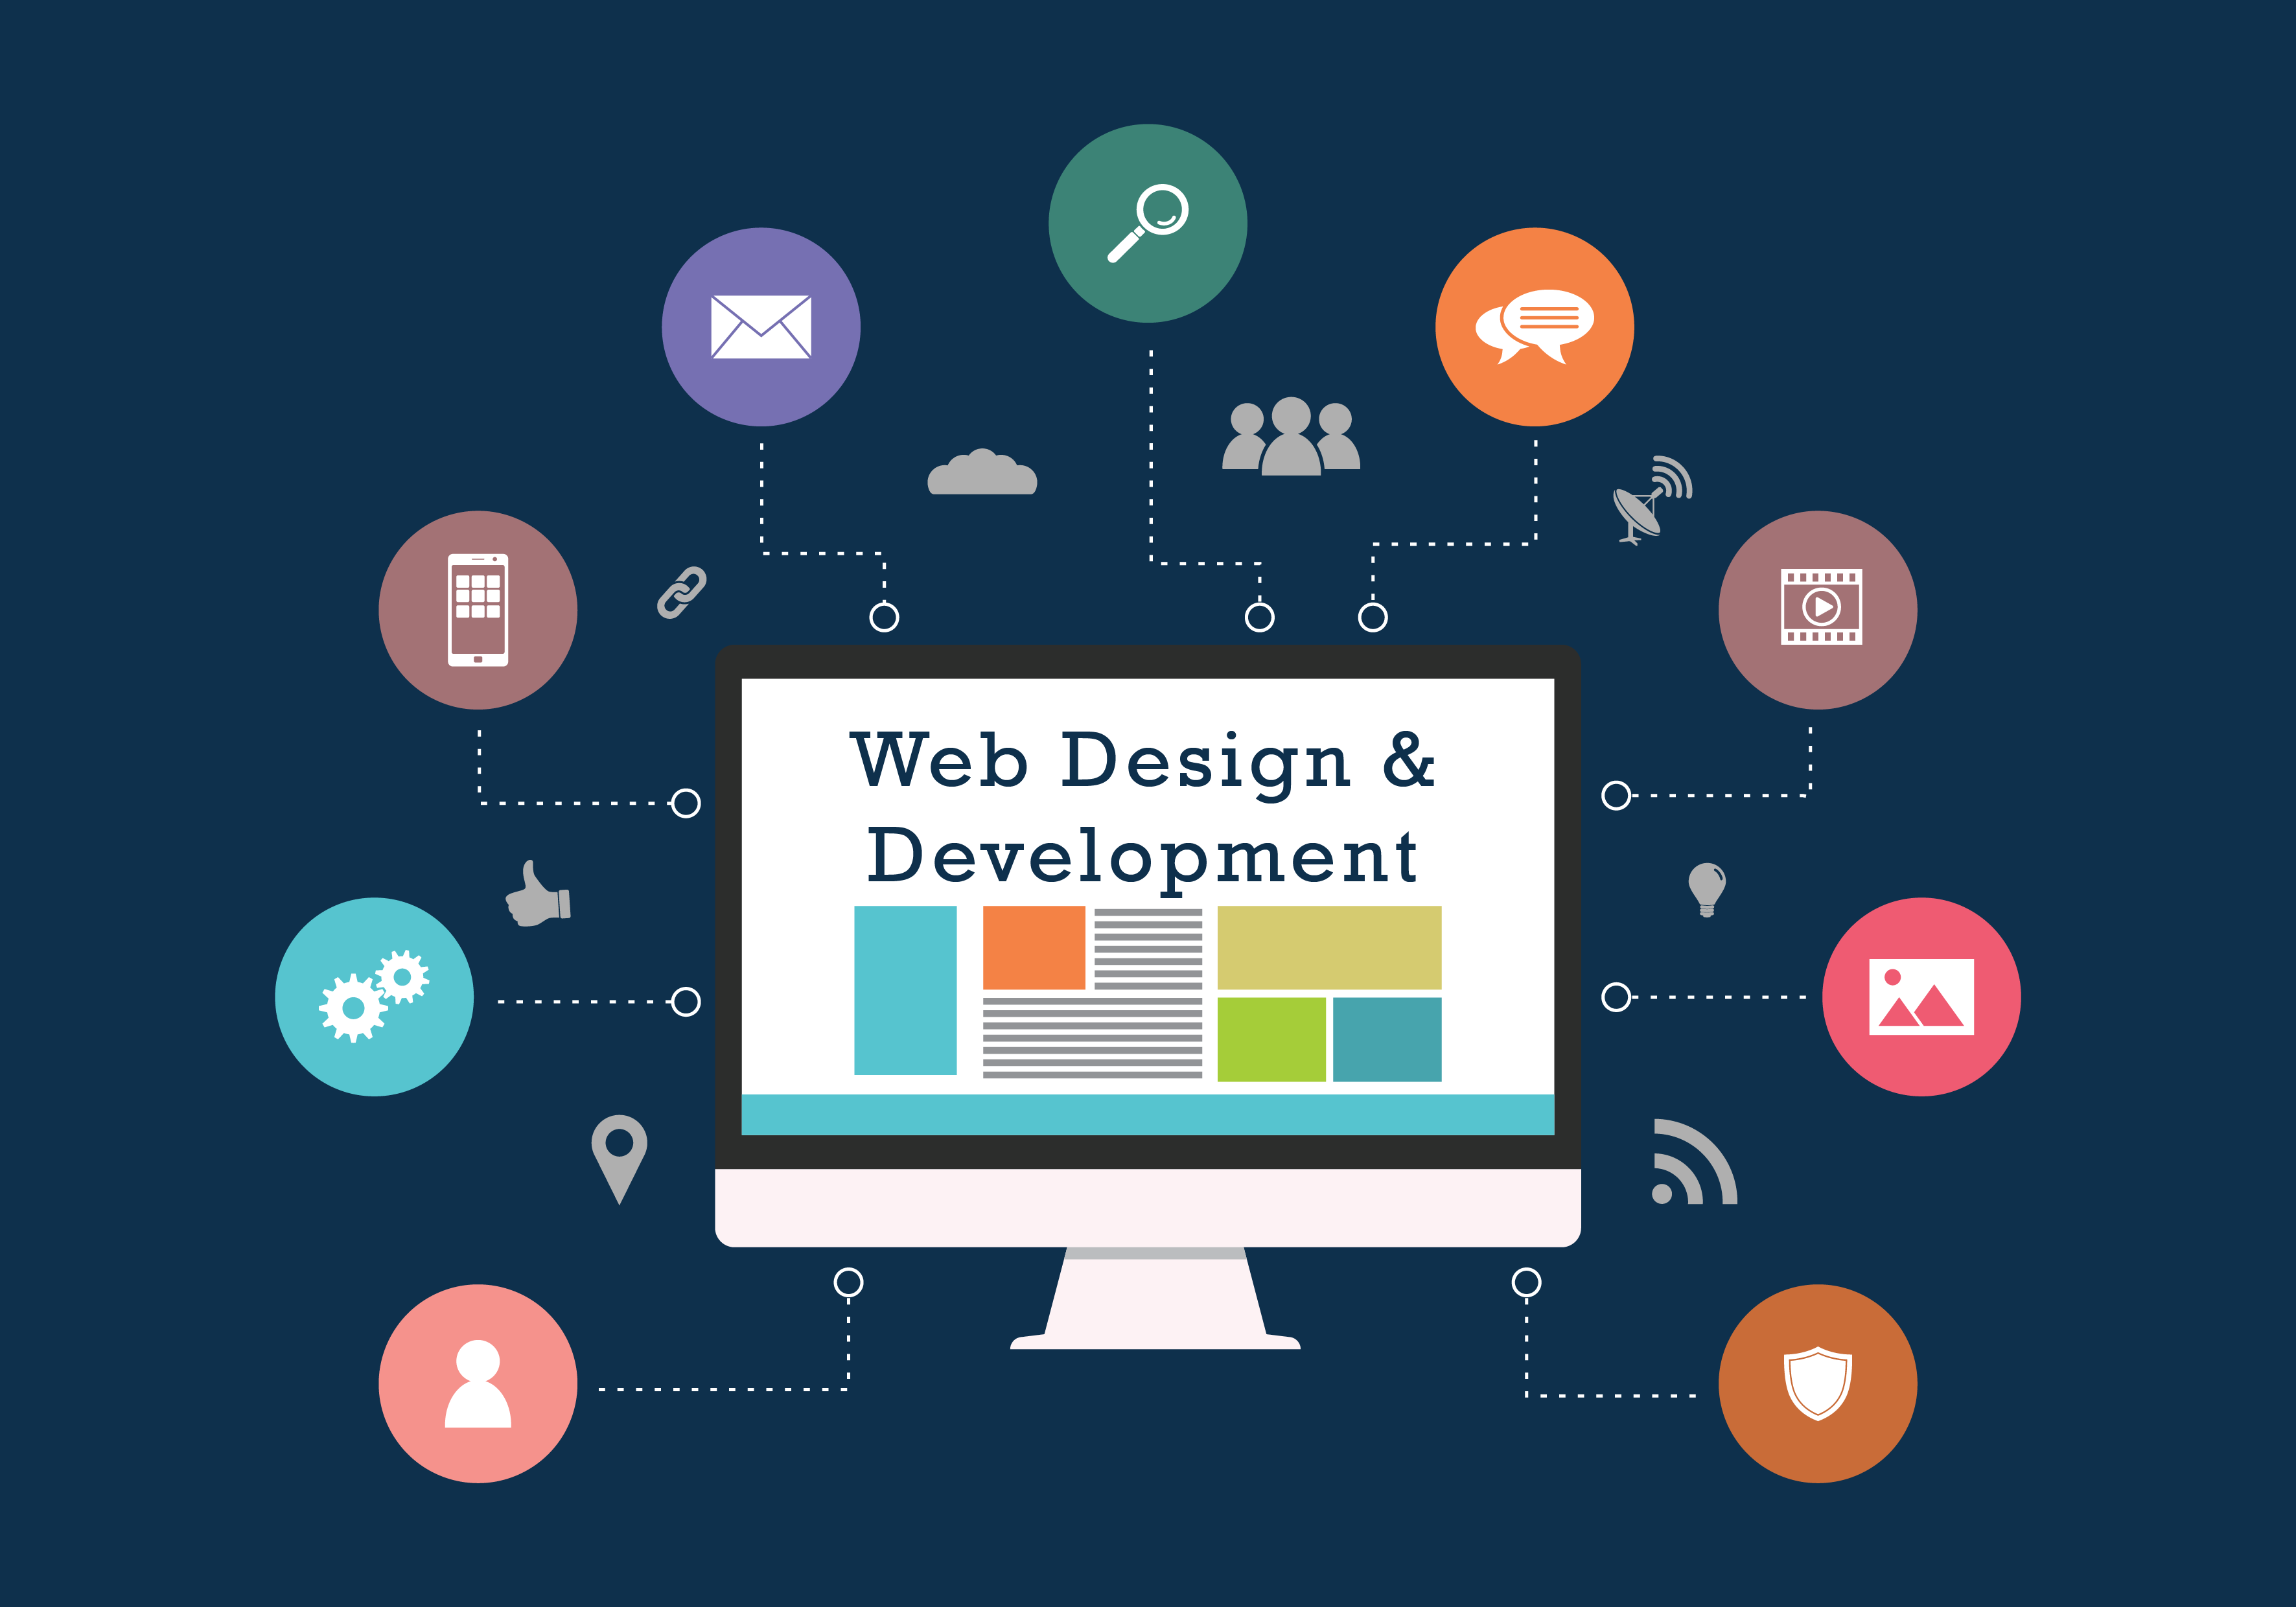 Web Designing Companies